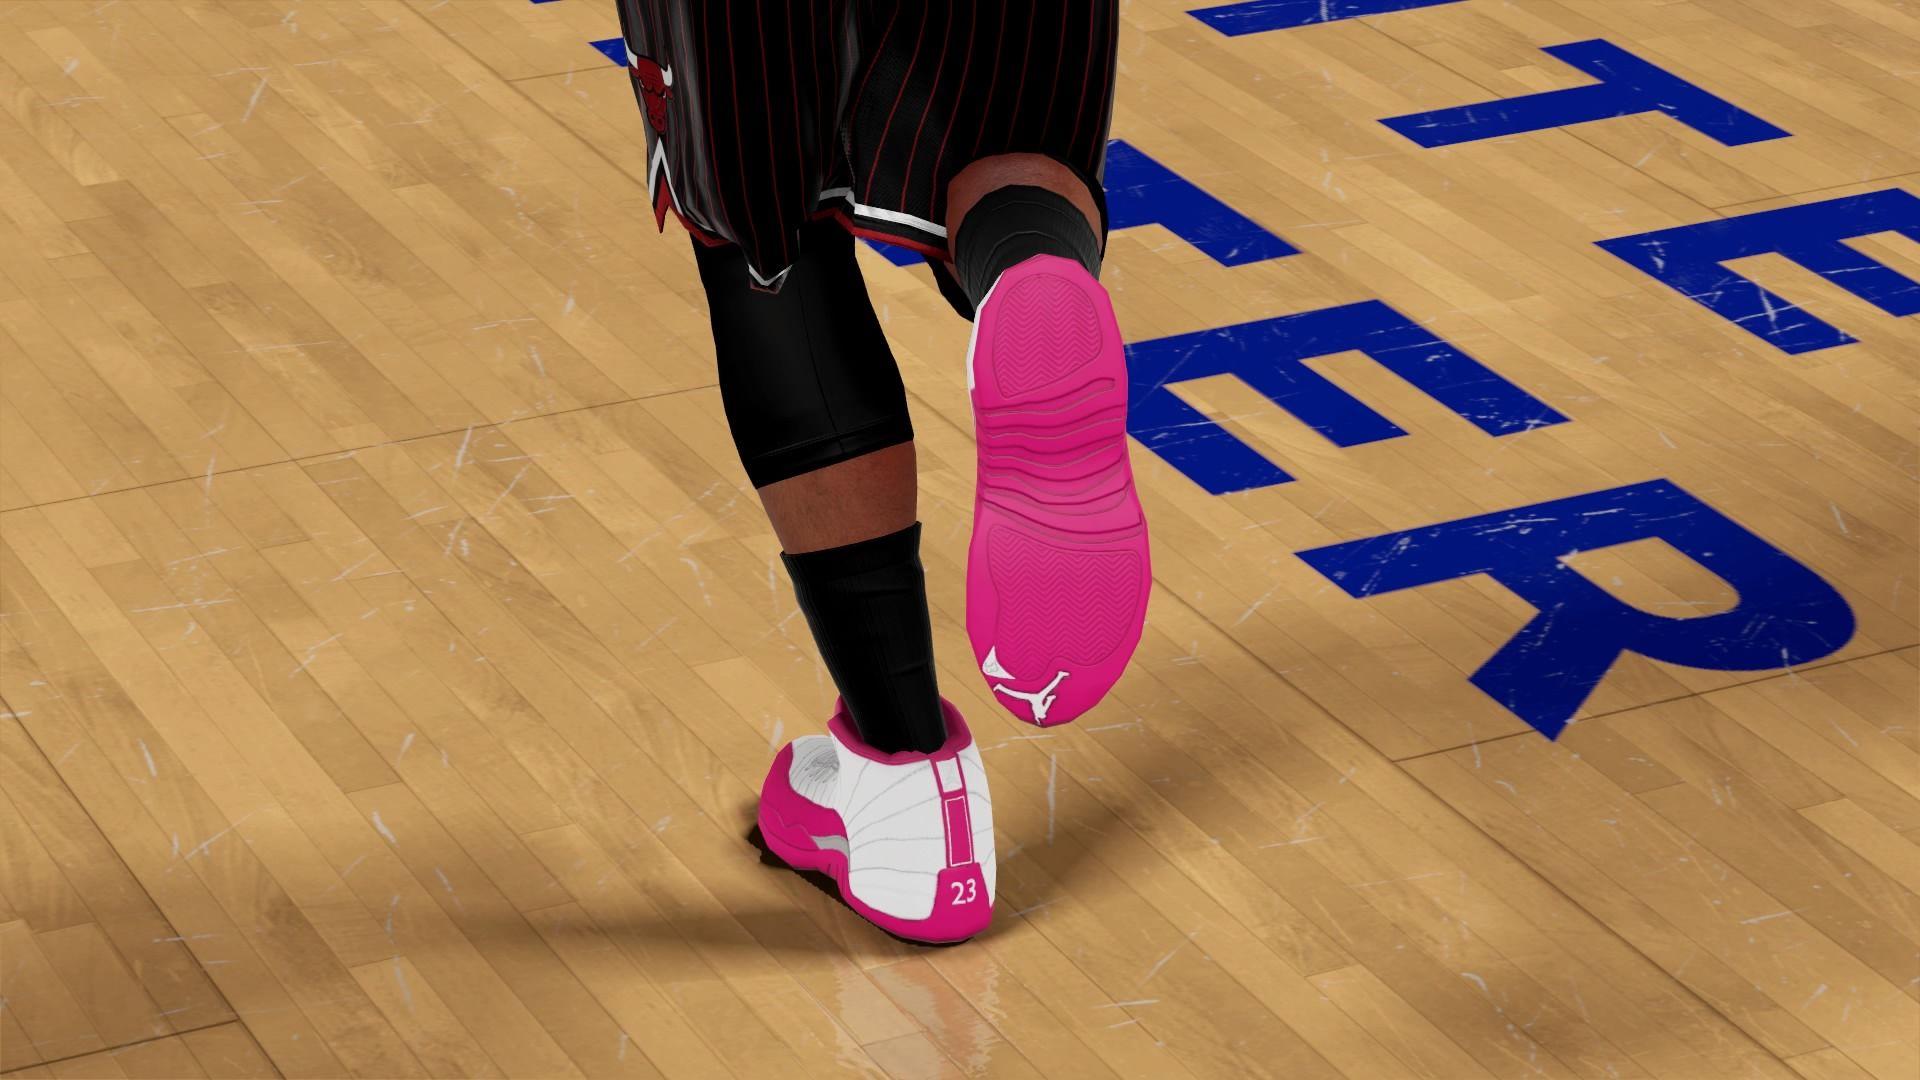 NBA 2K16 Kicks: The Air Jordan 12 GS Dynamic Pink Looks Great